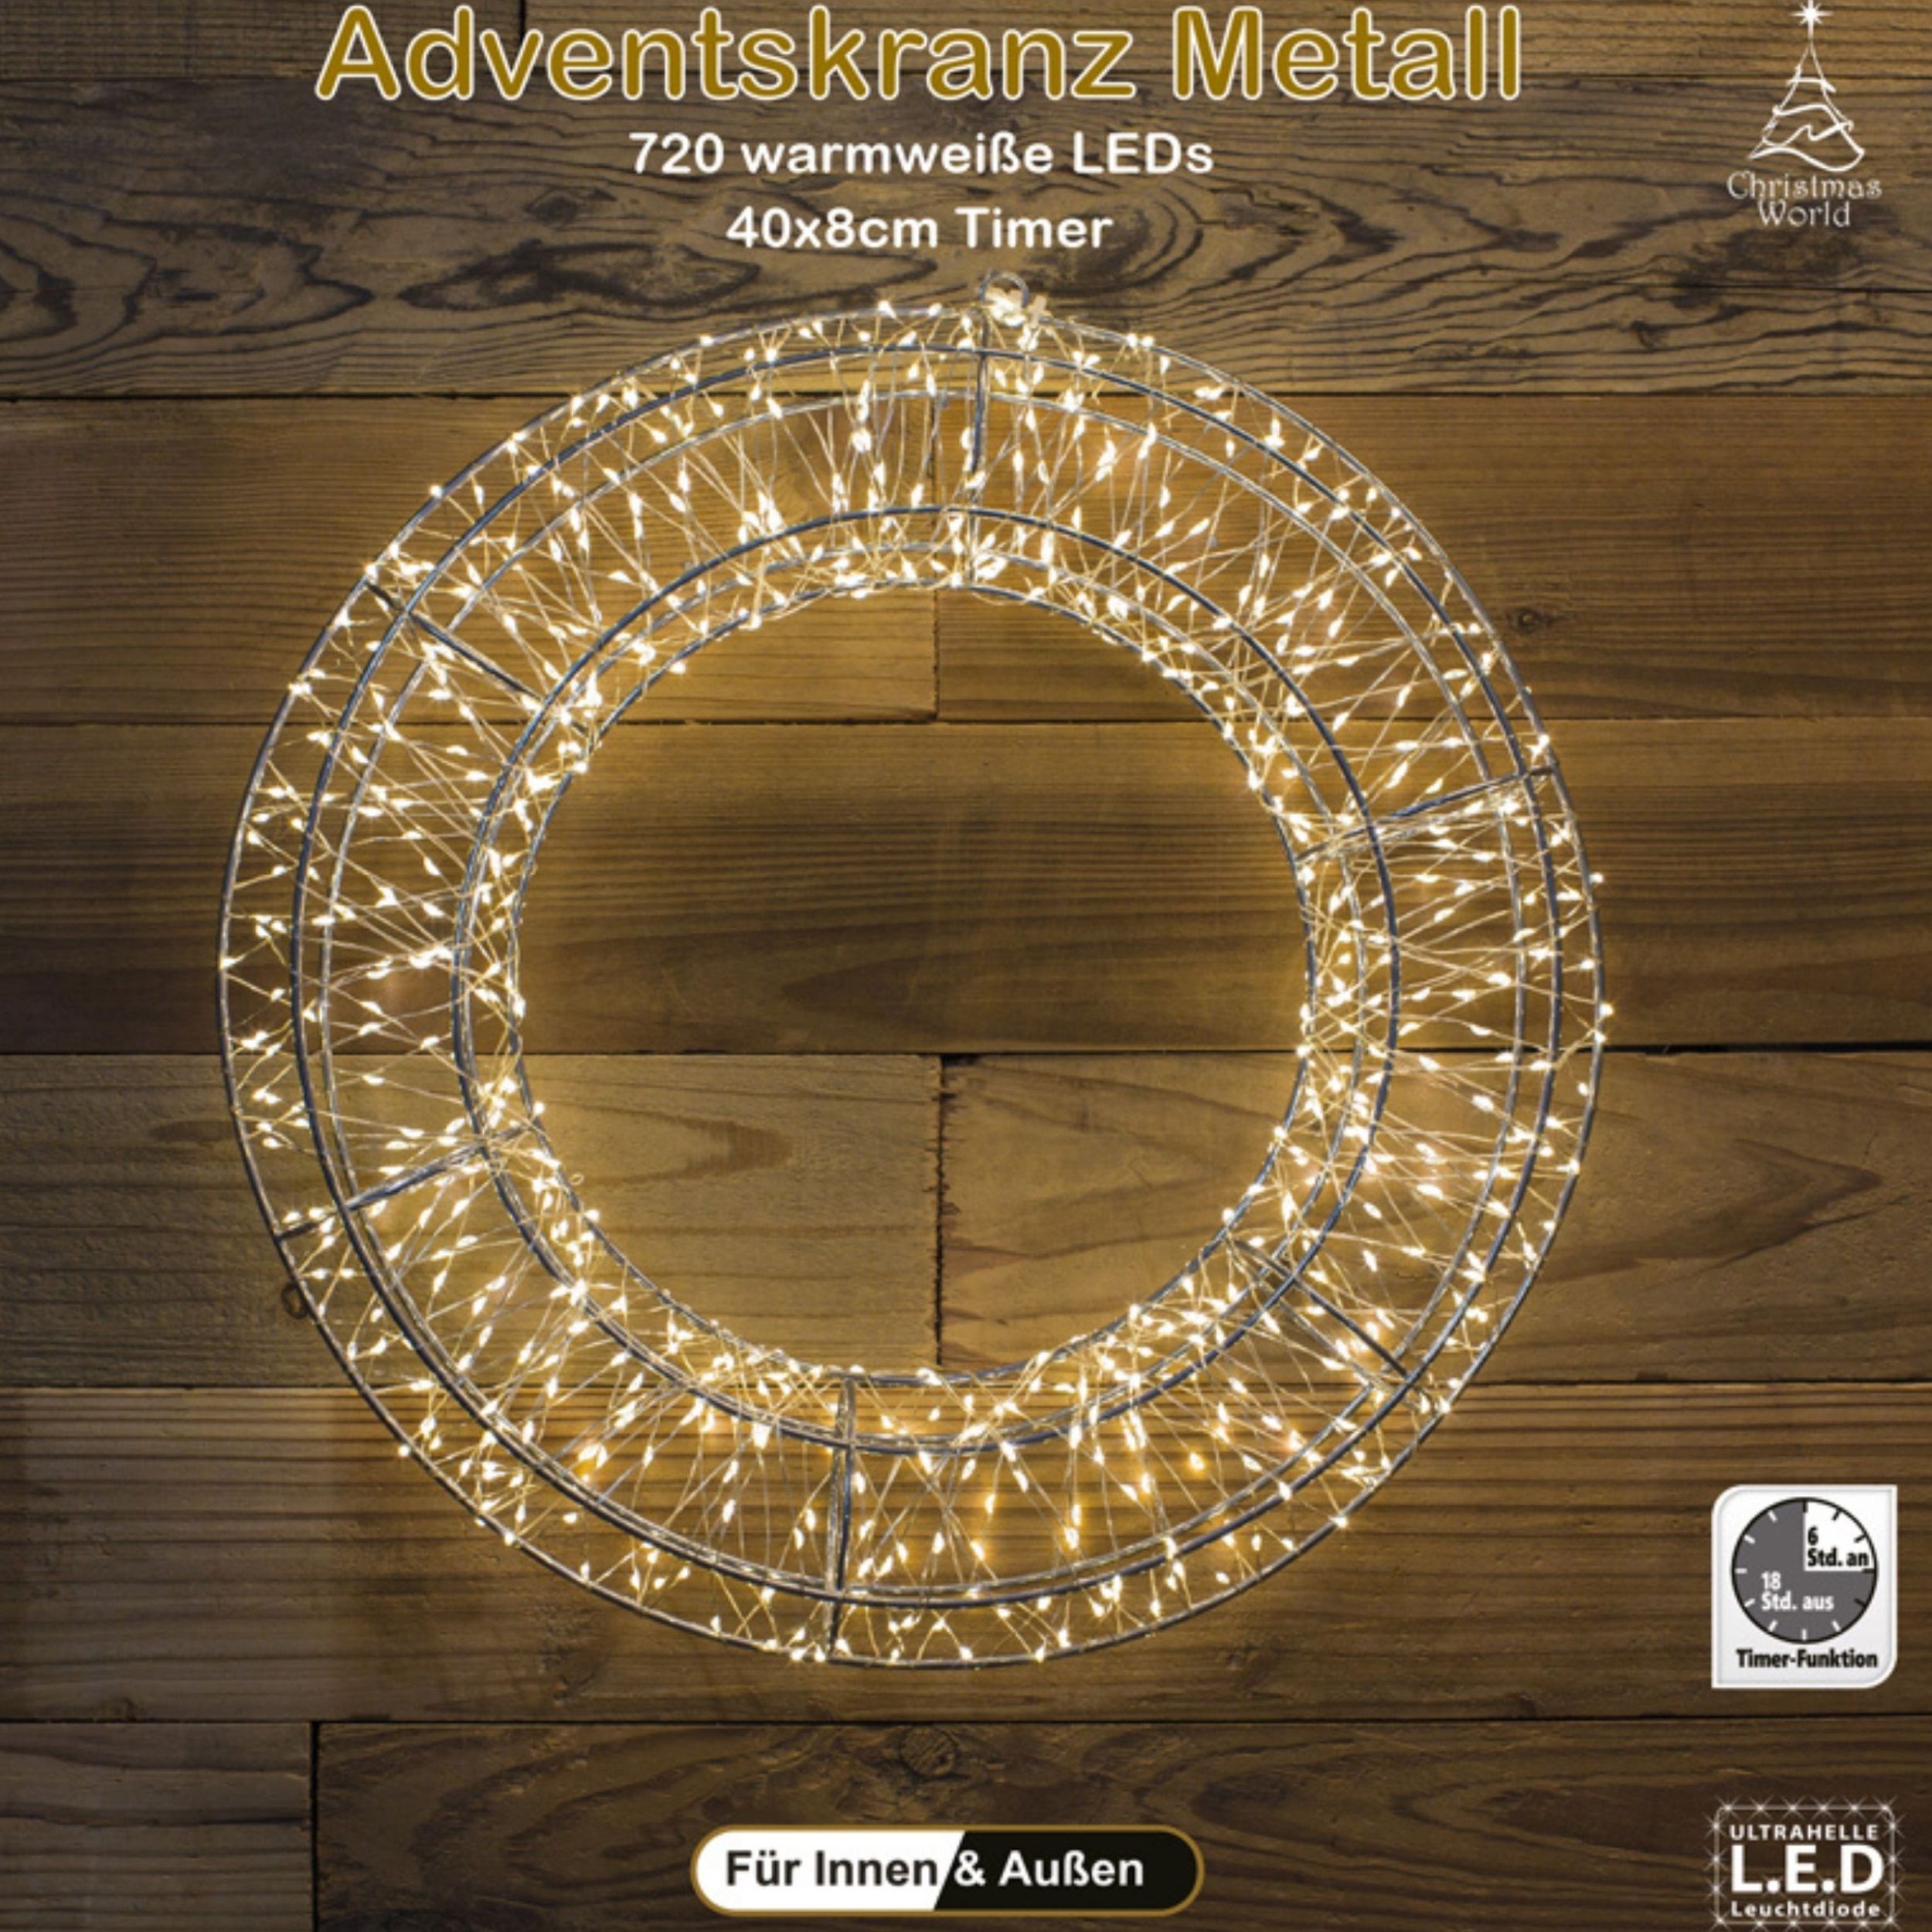 LED Adventskranz Metall 40 x 8 cm mit Timer